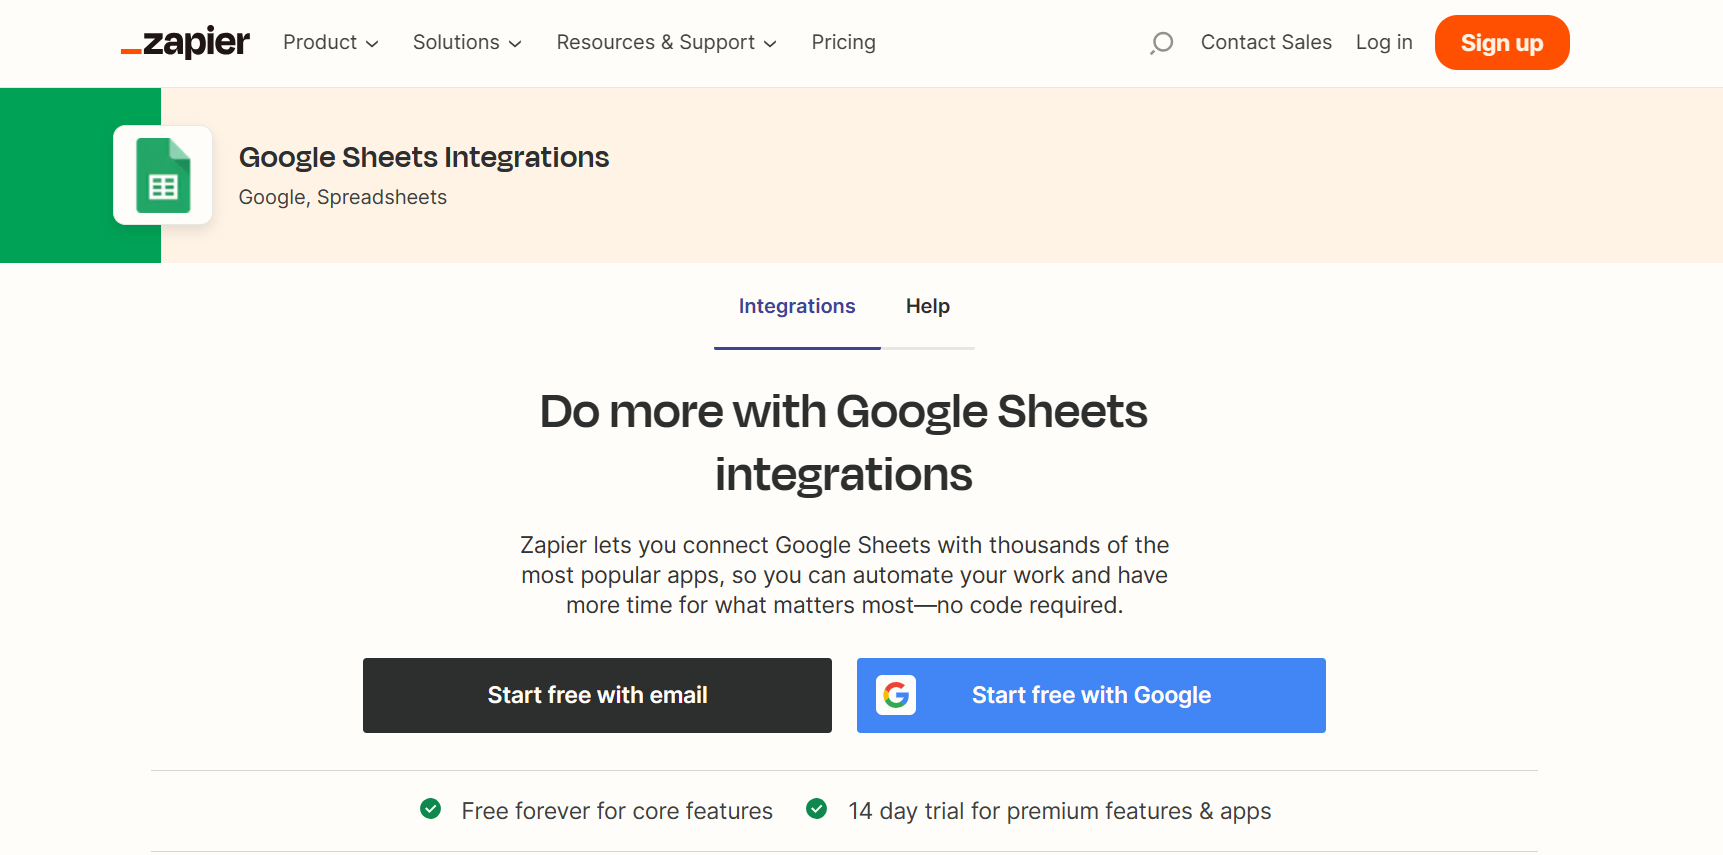 A screenshot of Zapier’s Google Sheets integration page